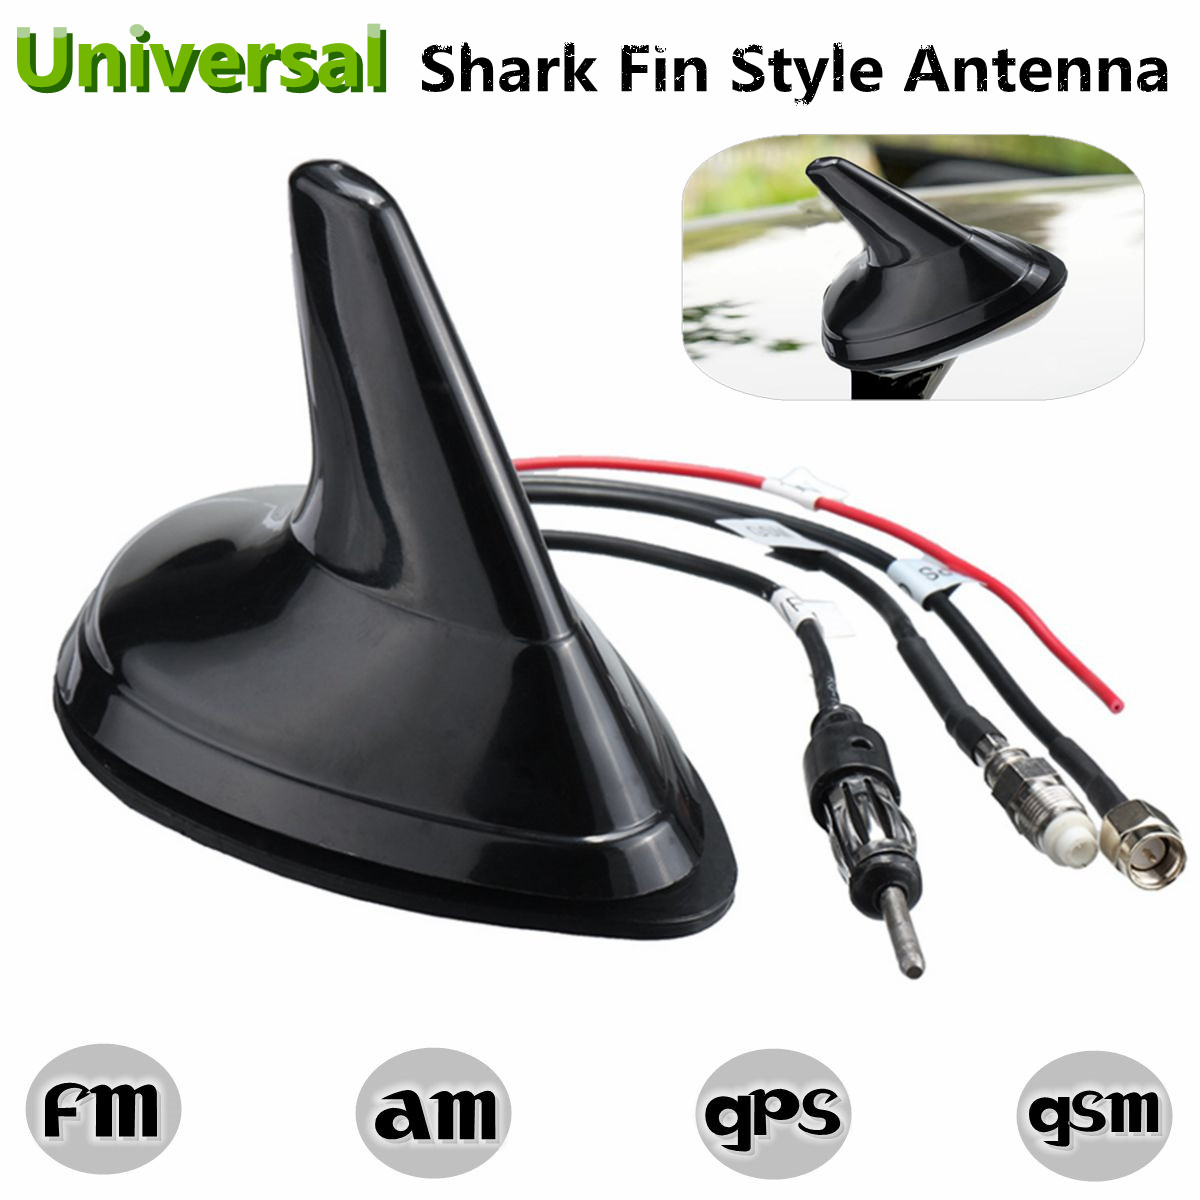 Universal-Auto-Car-Shark-Fin-Roof-Antenna-Aerial-FM--AM--GPS--GSM-Decorate-1212309